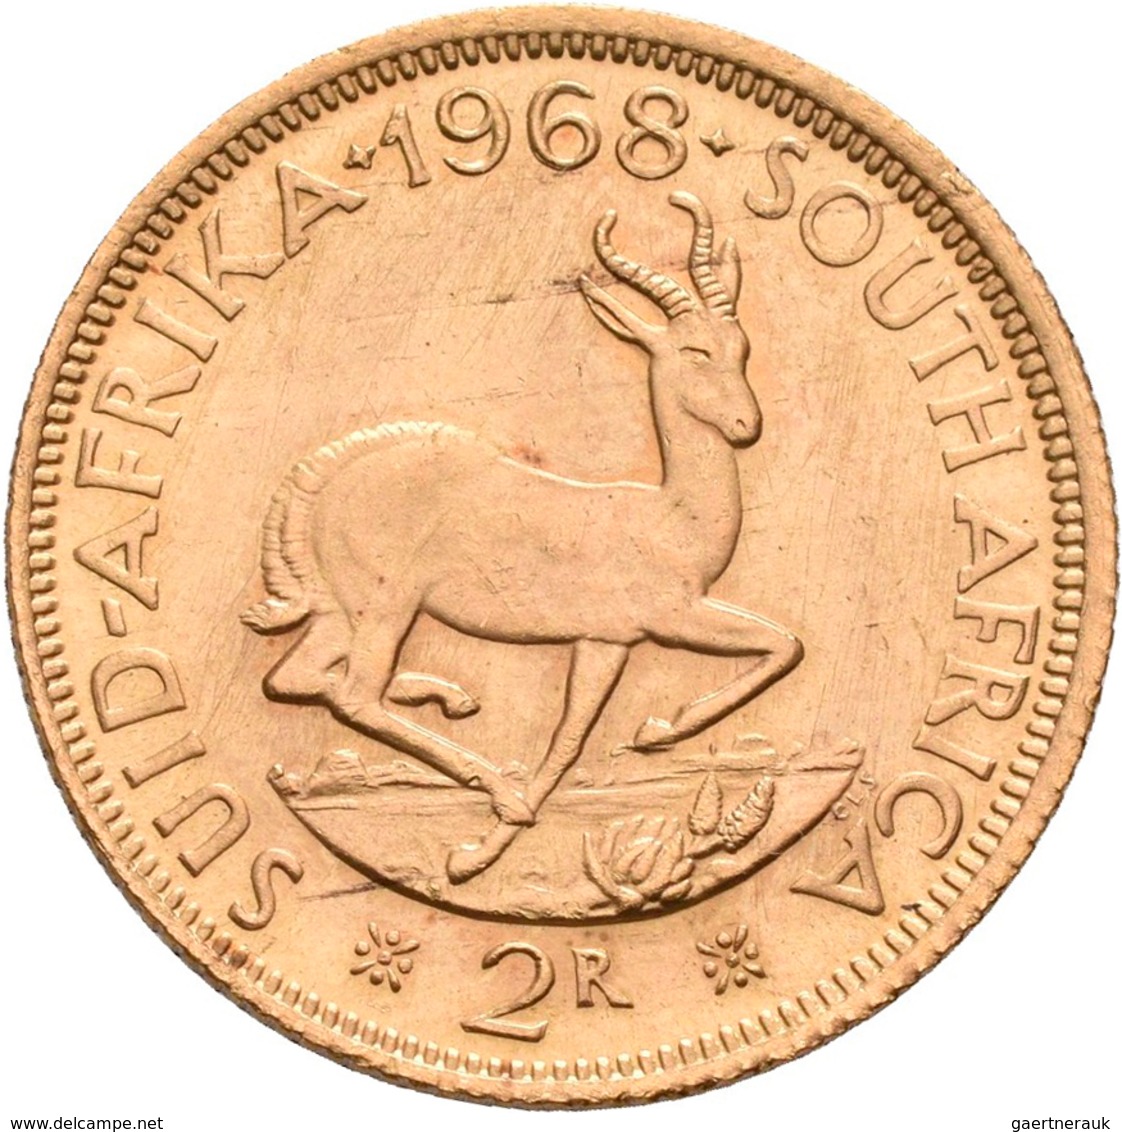 Südafrika - Anlagegold: Südafrika: Lot 3 Stück; 2 Rand 1968, KM #64, Friedberg 11. Je 7,99 G, 917/10 - Sud Africa